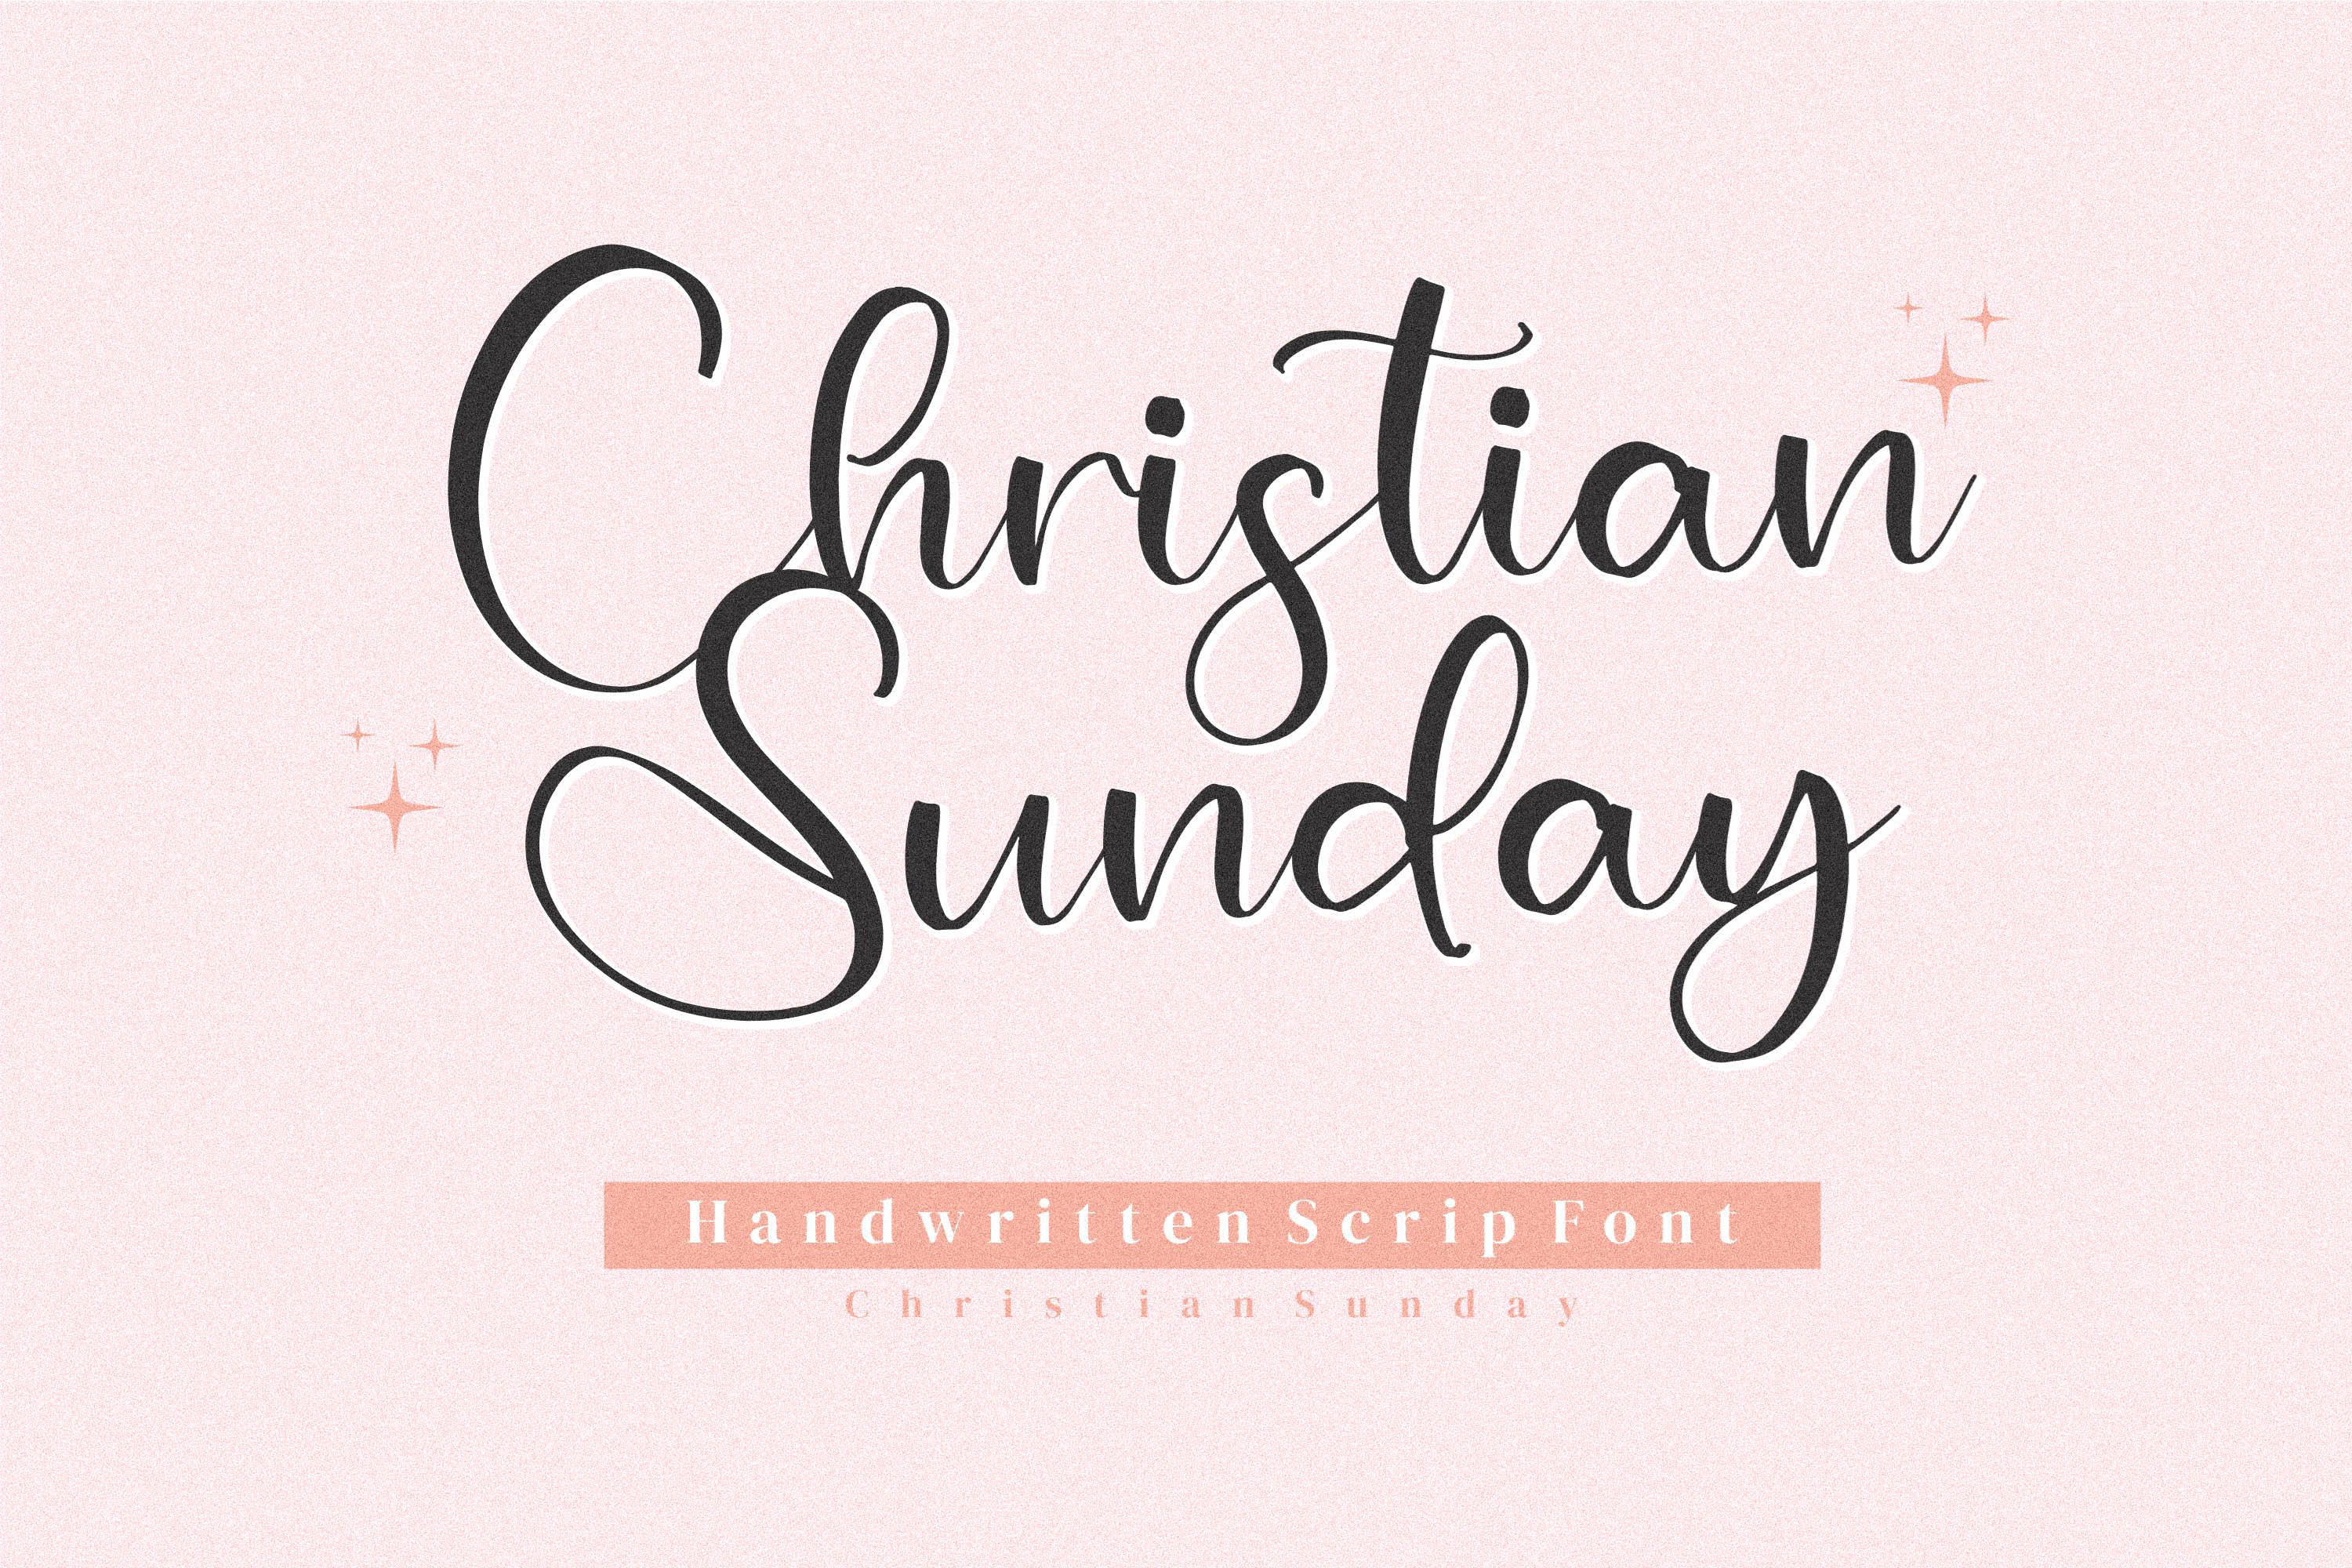 Christian Sunday